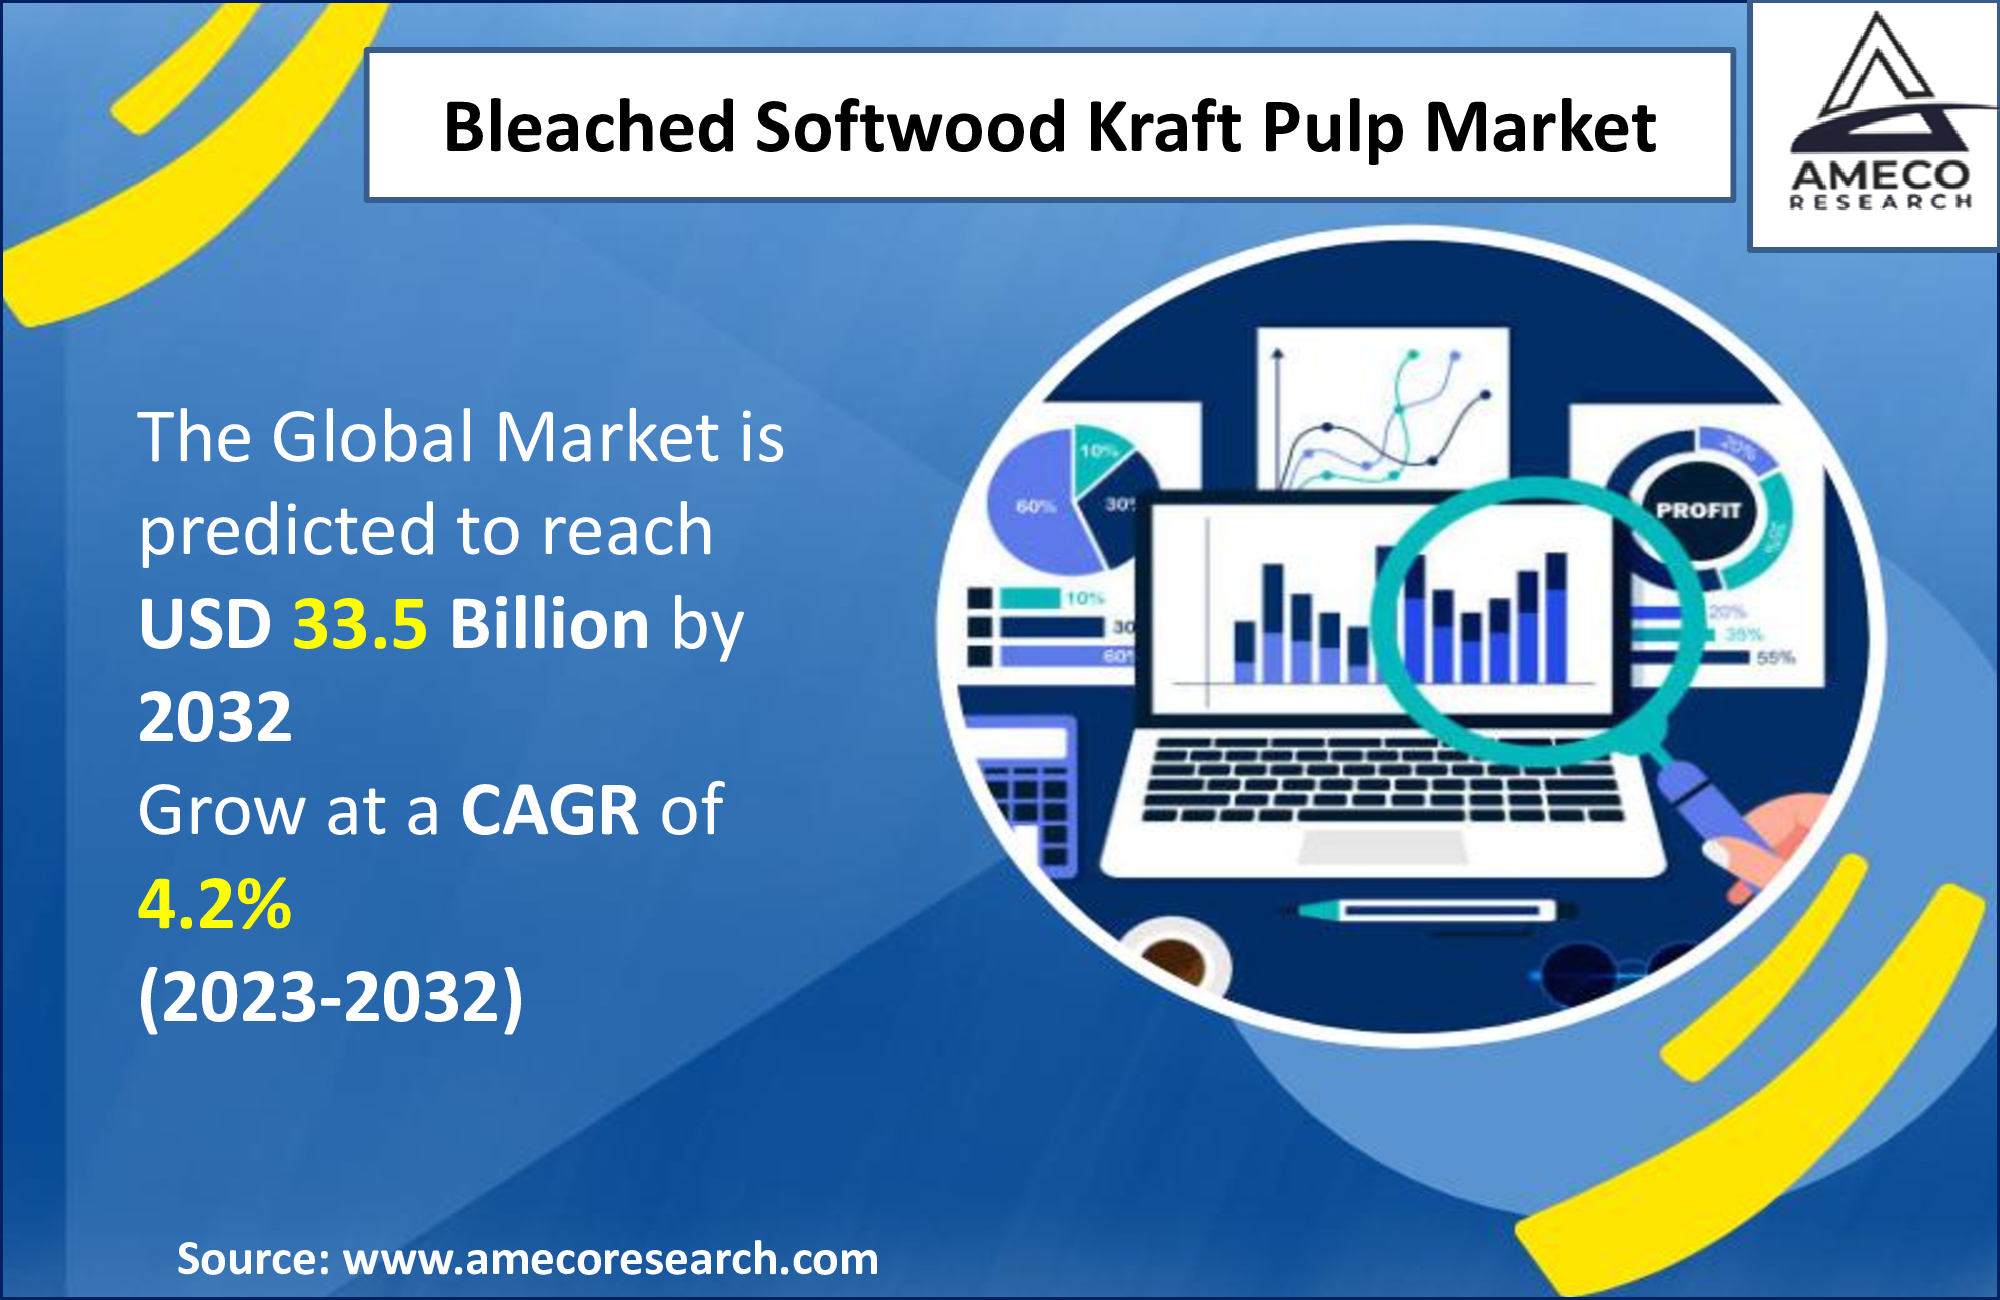 Bleached Softwood Kraft Pulp Market